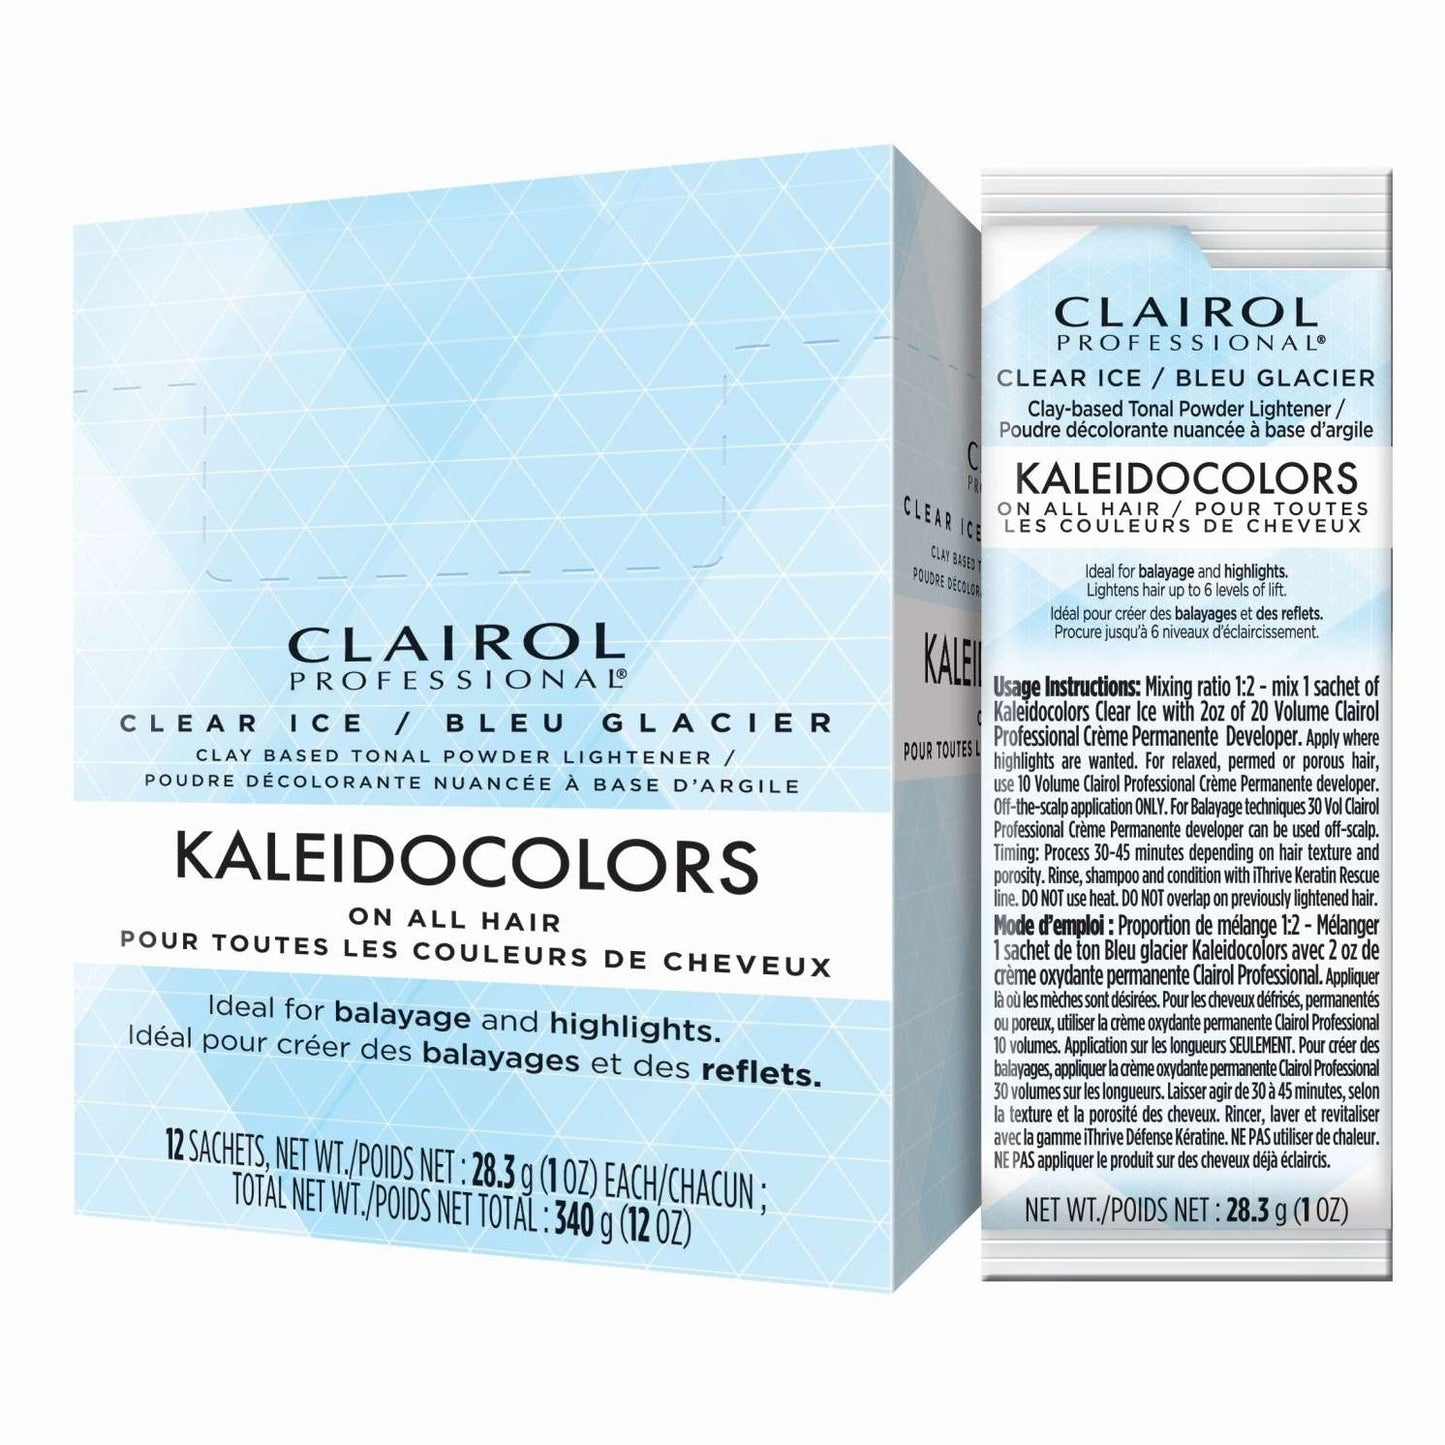 Clairol Professional Clear Ice Tonal Powder Lightner Kaleidocolors en todo el cabello